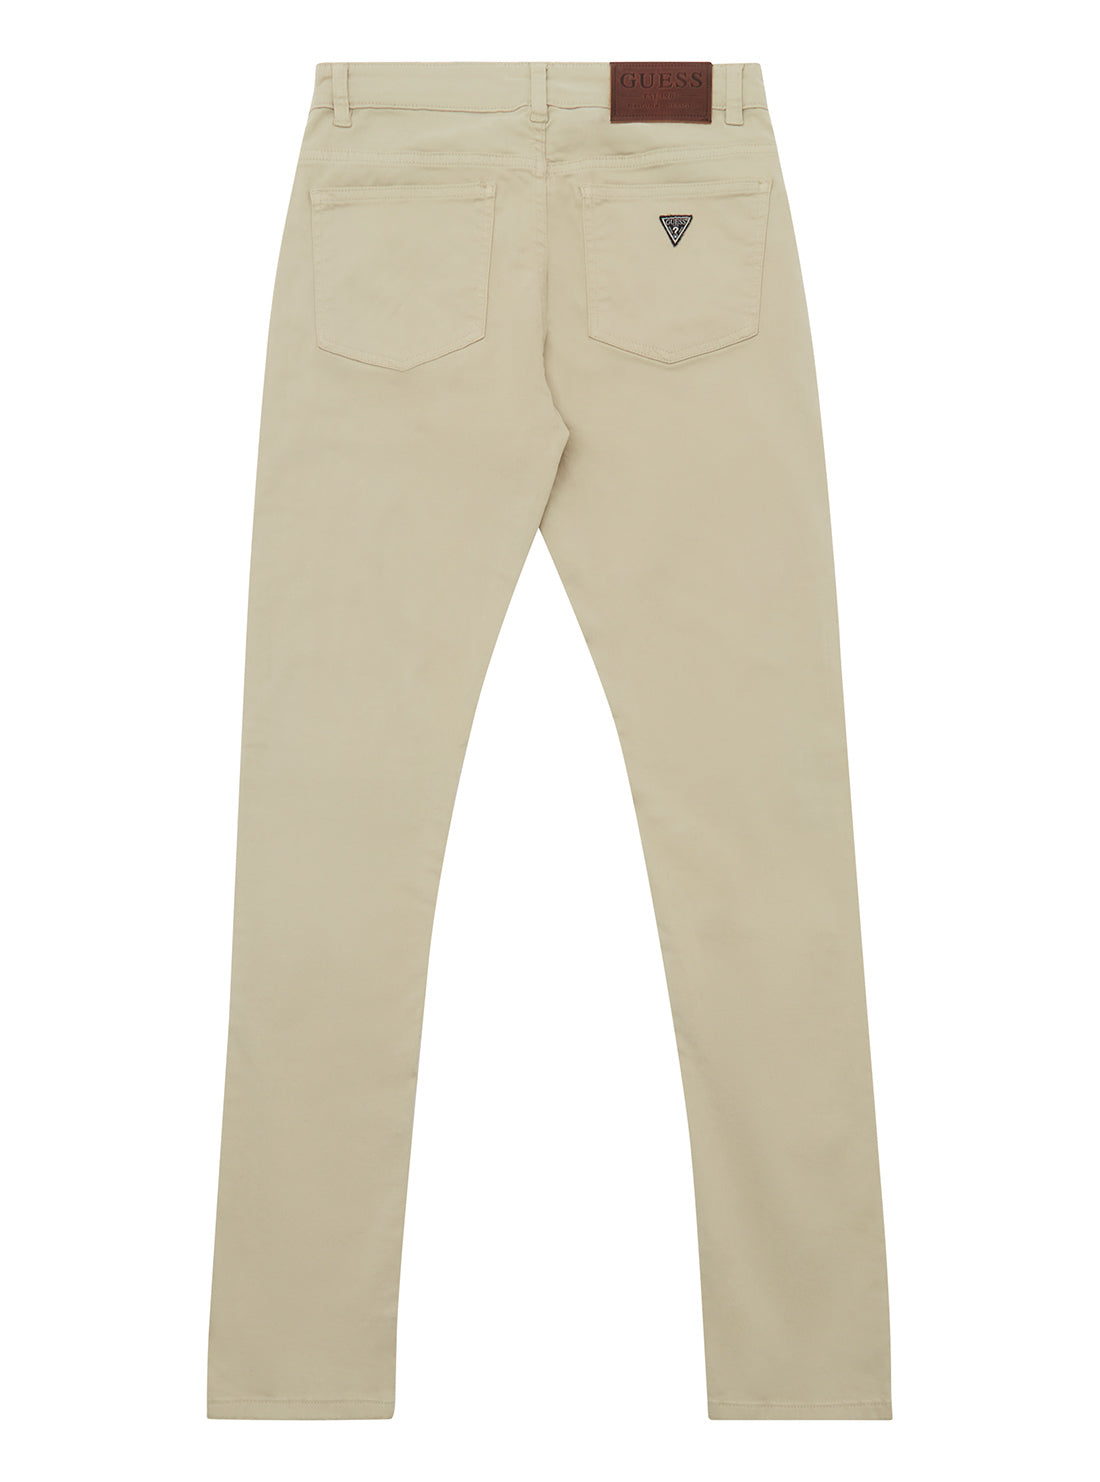 GUESS Big Boy Grey Sateen Skinny Pants (7-16) L2RB10WDD52 Back View